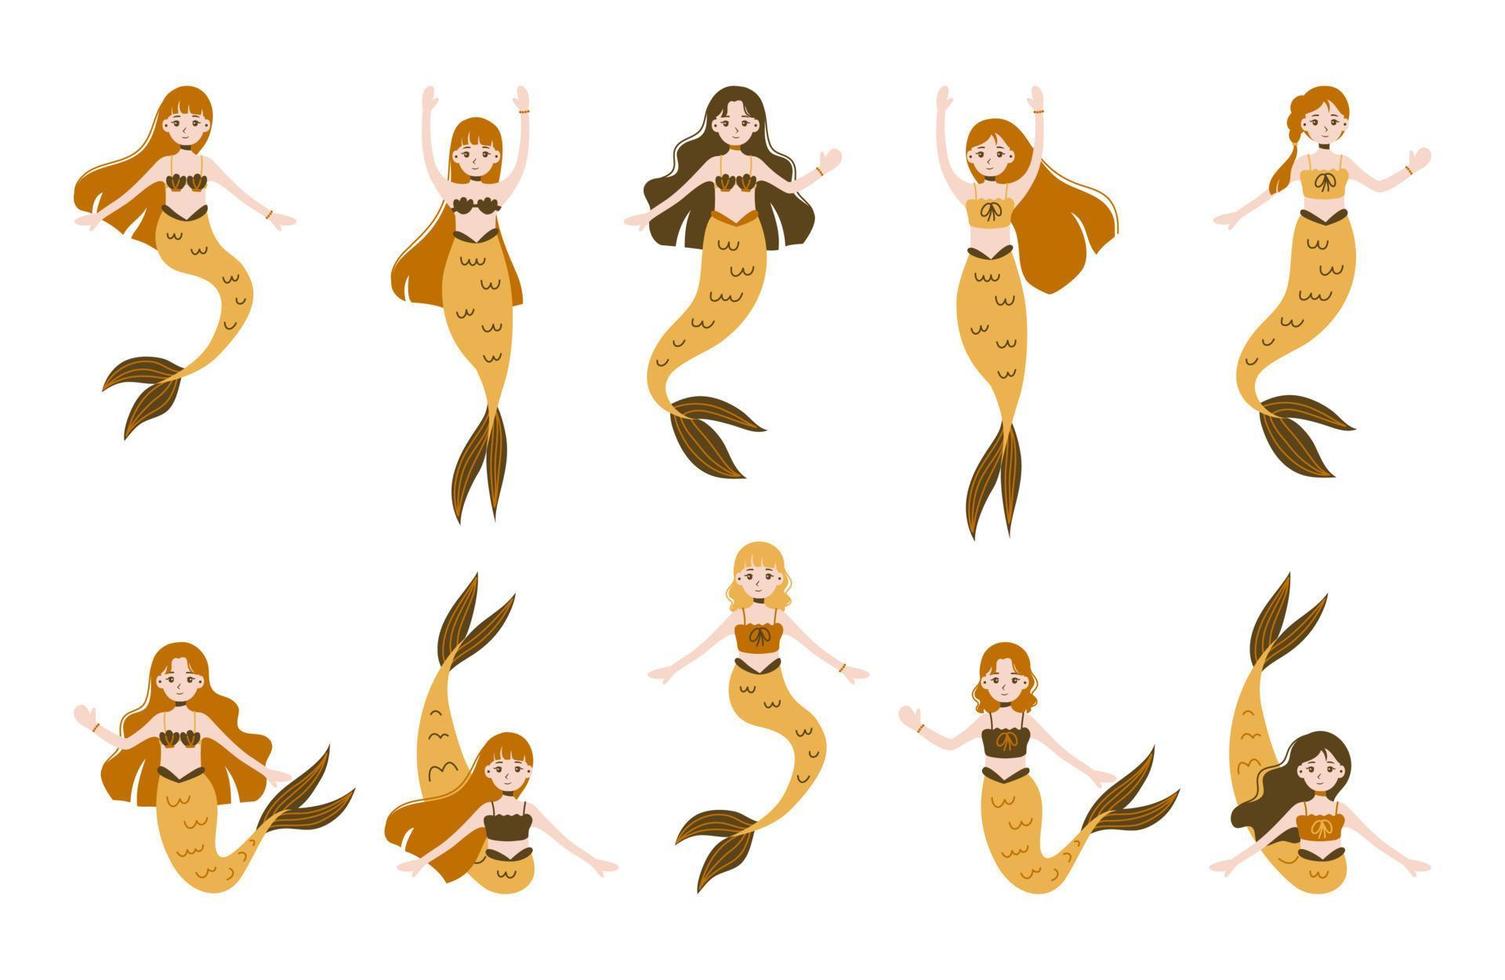 mermaid illustration cartoon character vector flat concept